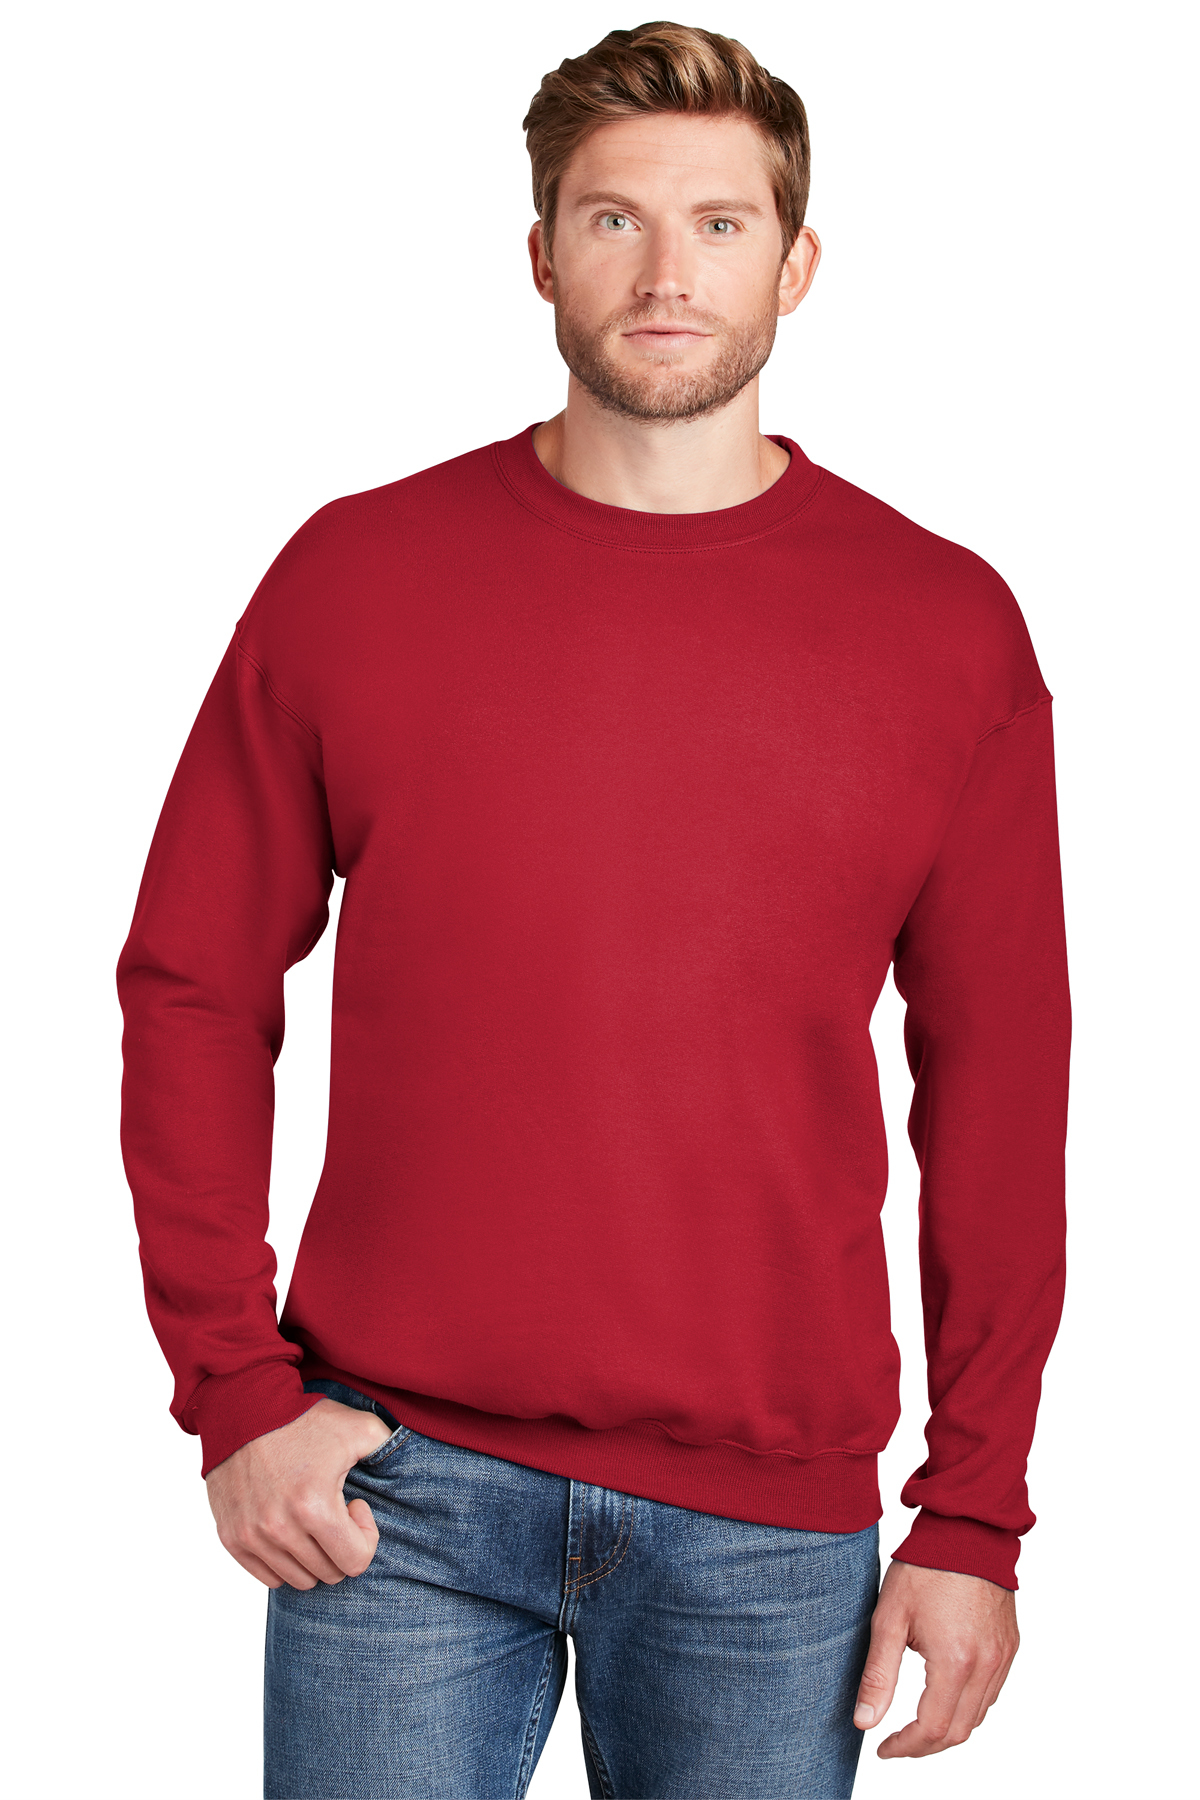 Hanes Ultimate Cotton - Crewneck Sweatshirt, Product